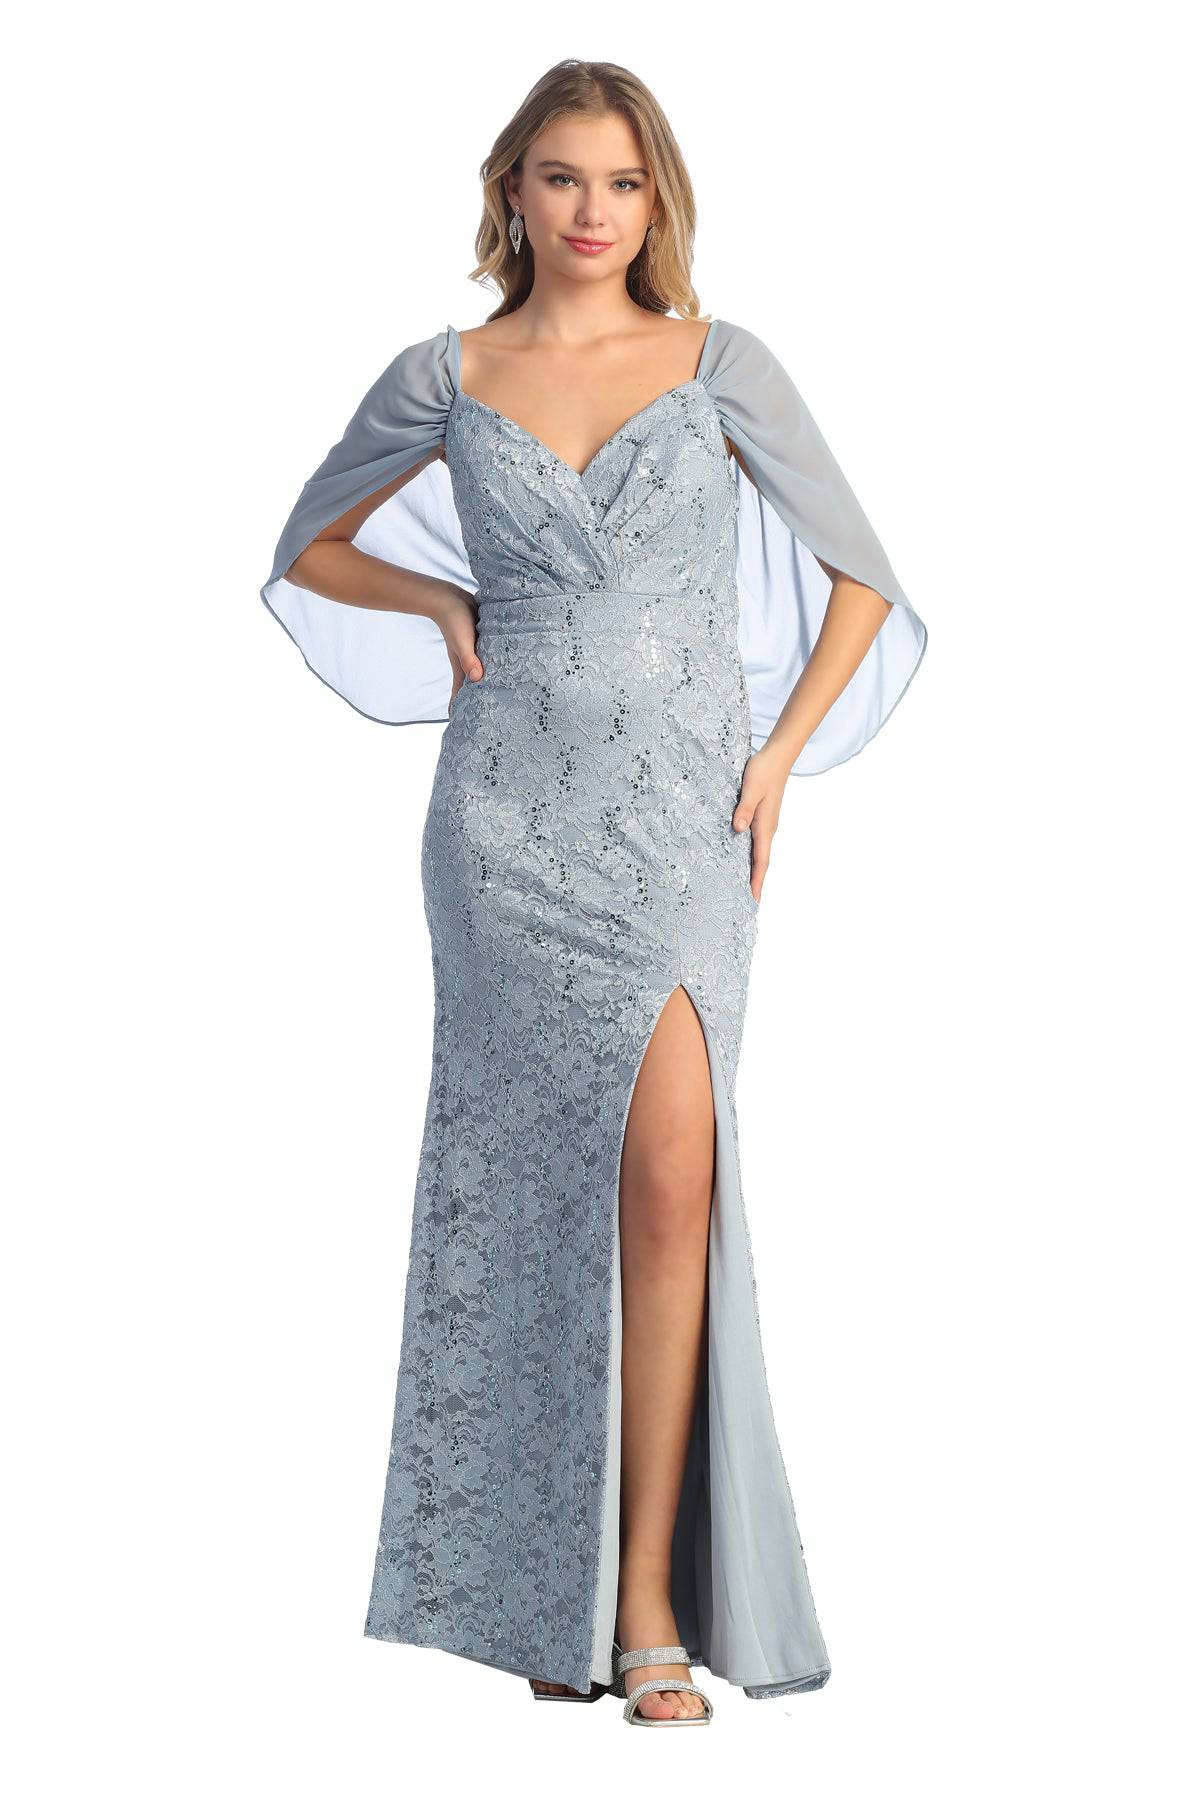 Dusty Blue Bridesmaid Dress - Etsy